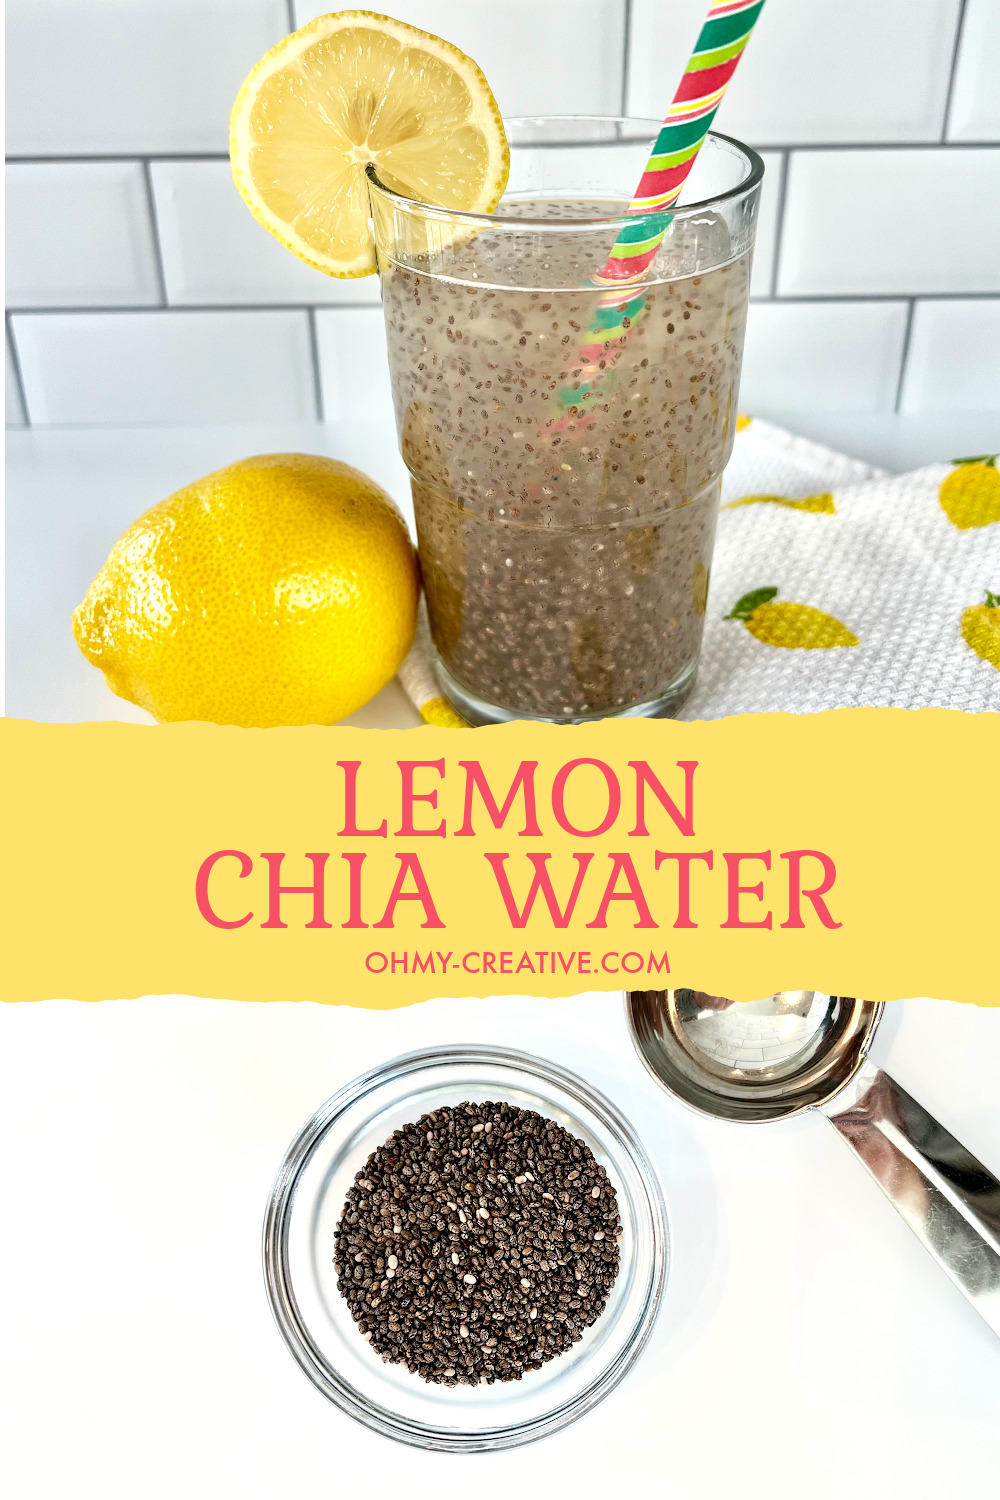 Lemon chia water made with chia seeds with added fresh lemons.